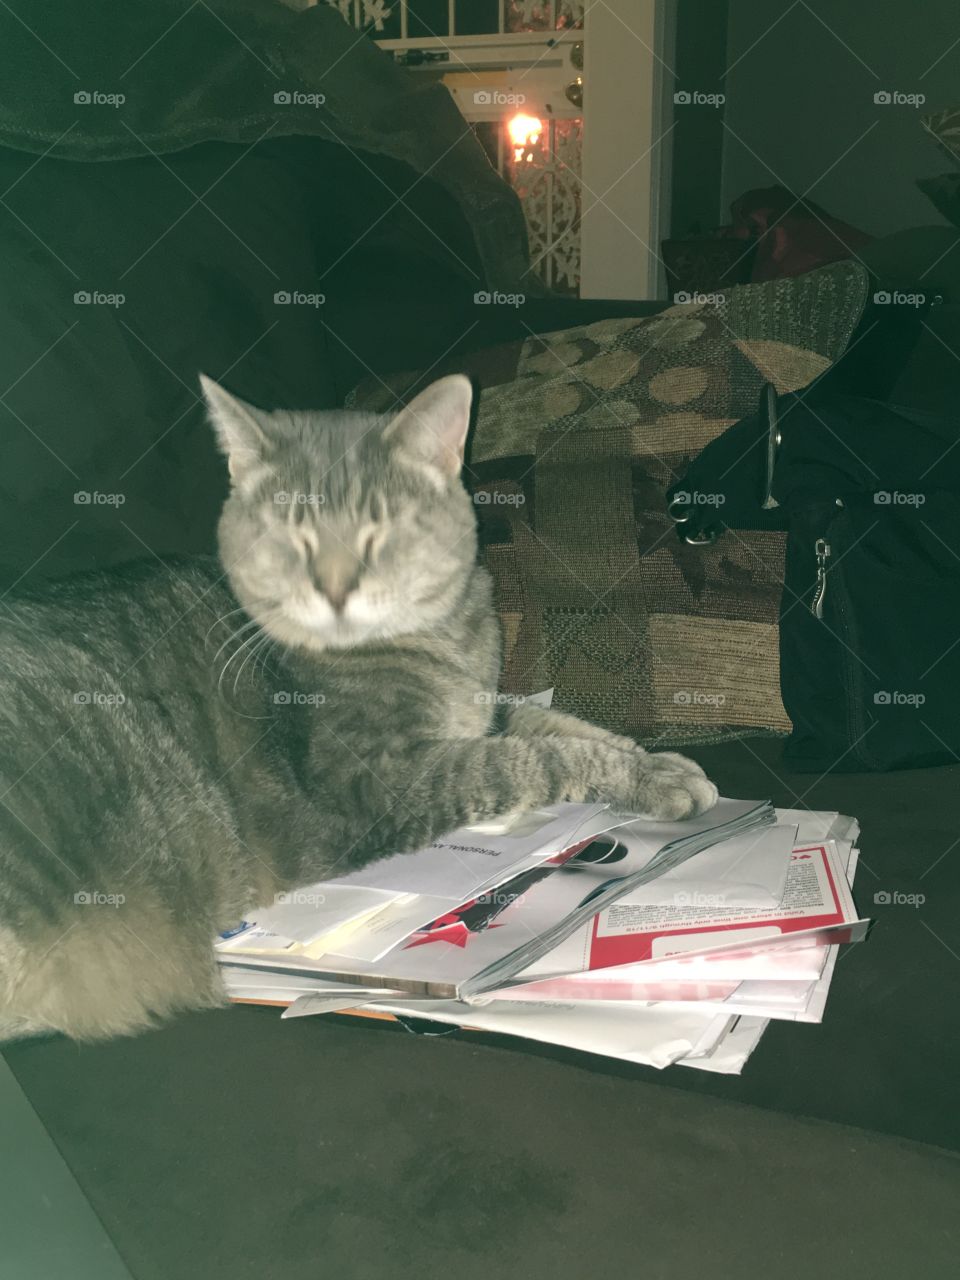 Izzy loves junk mail